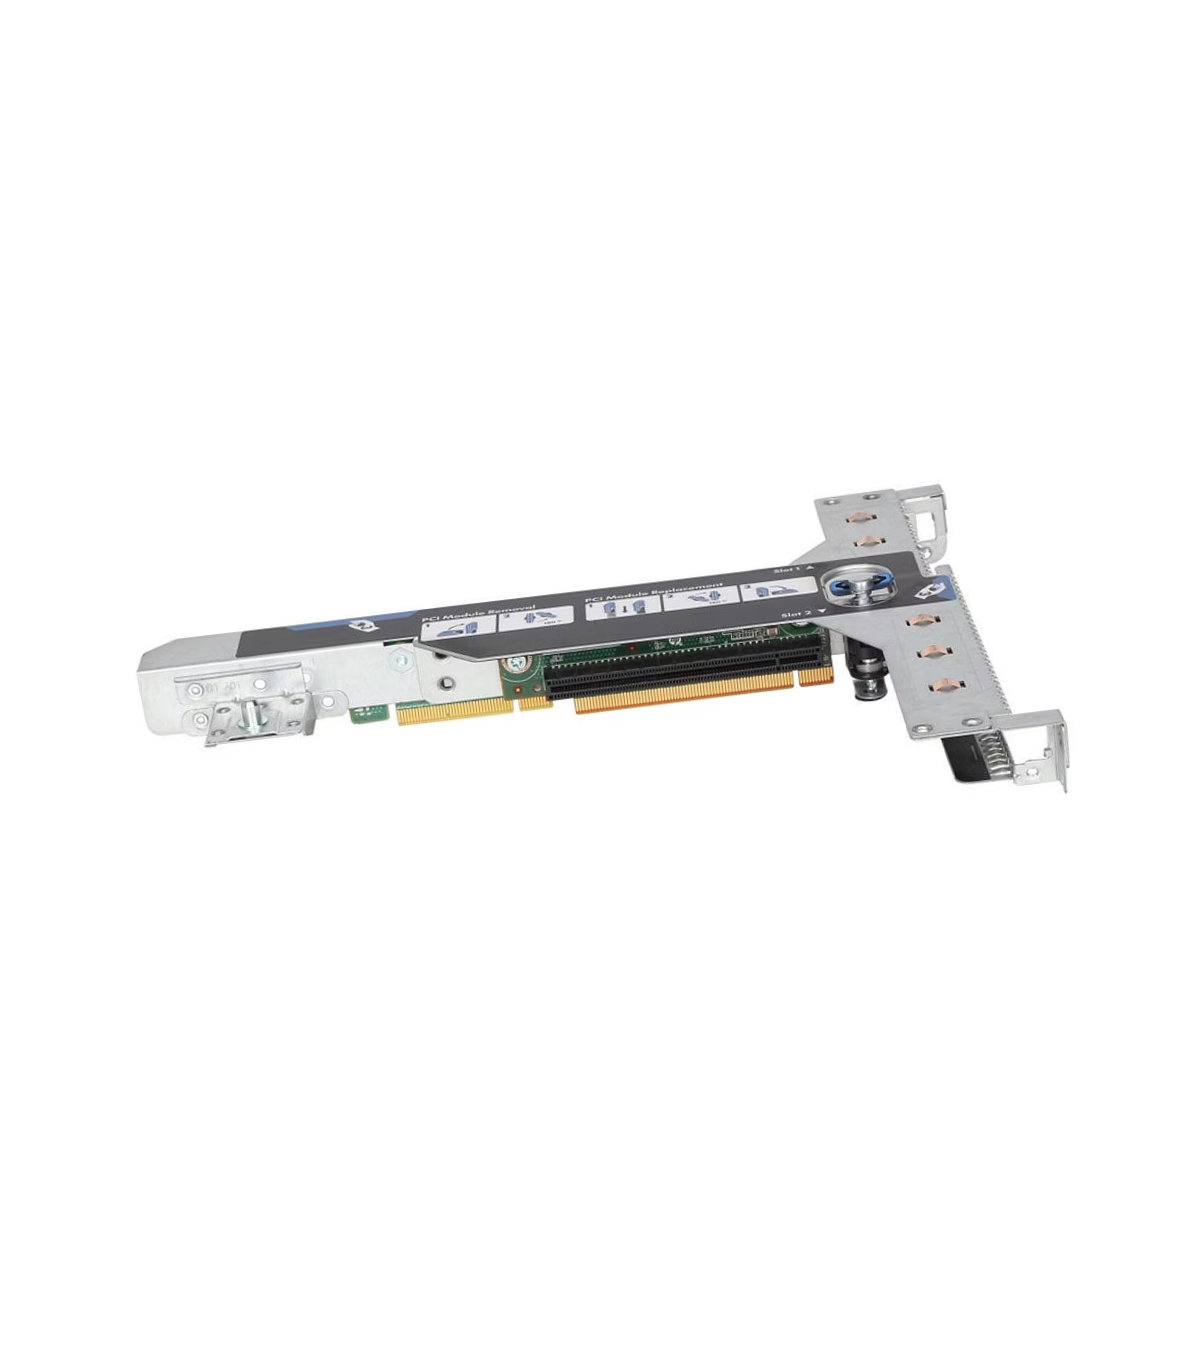 HP DL360P G8 2X PCIE 3.0 RISER CAGE 671352-001